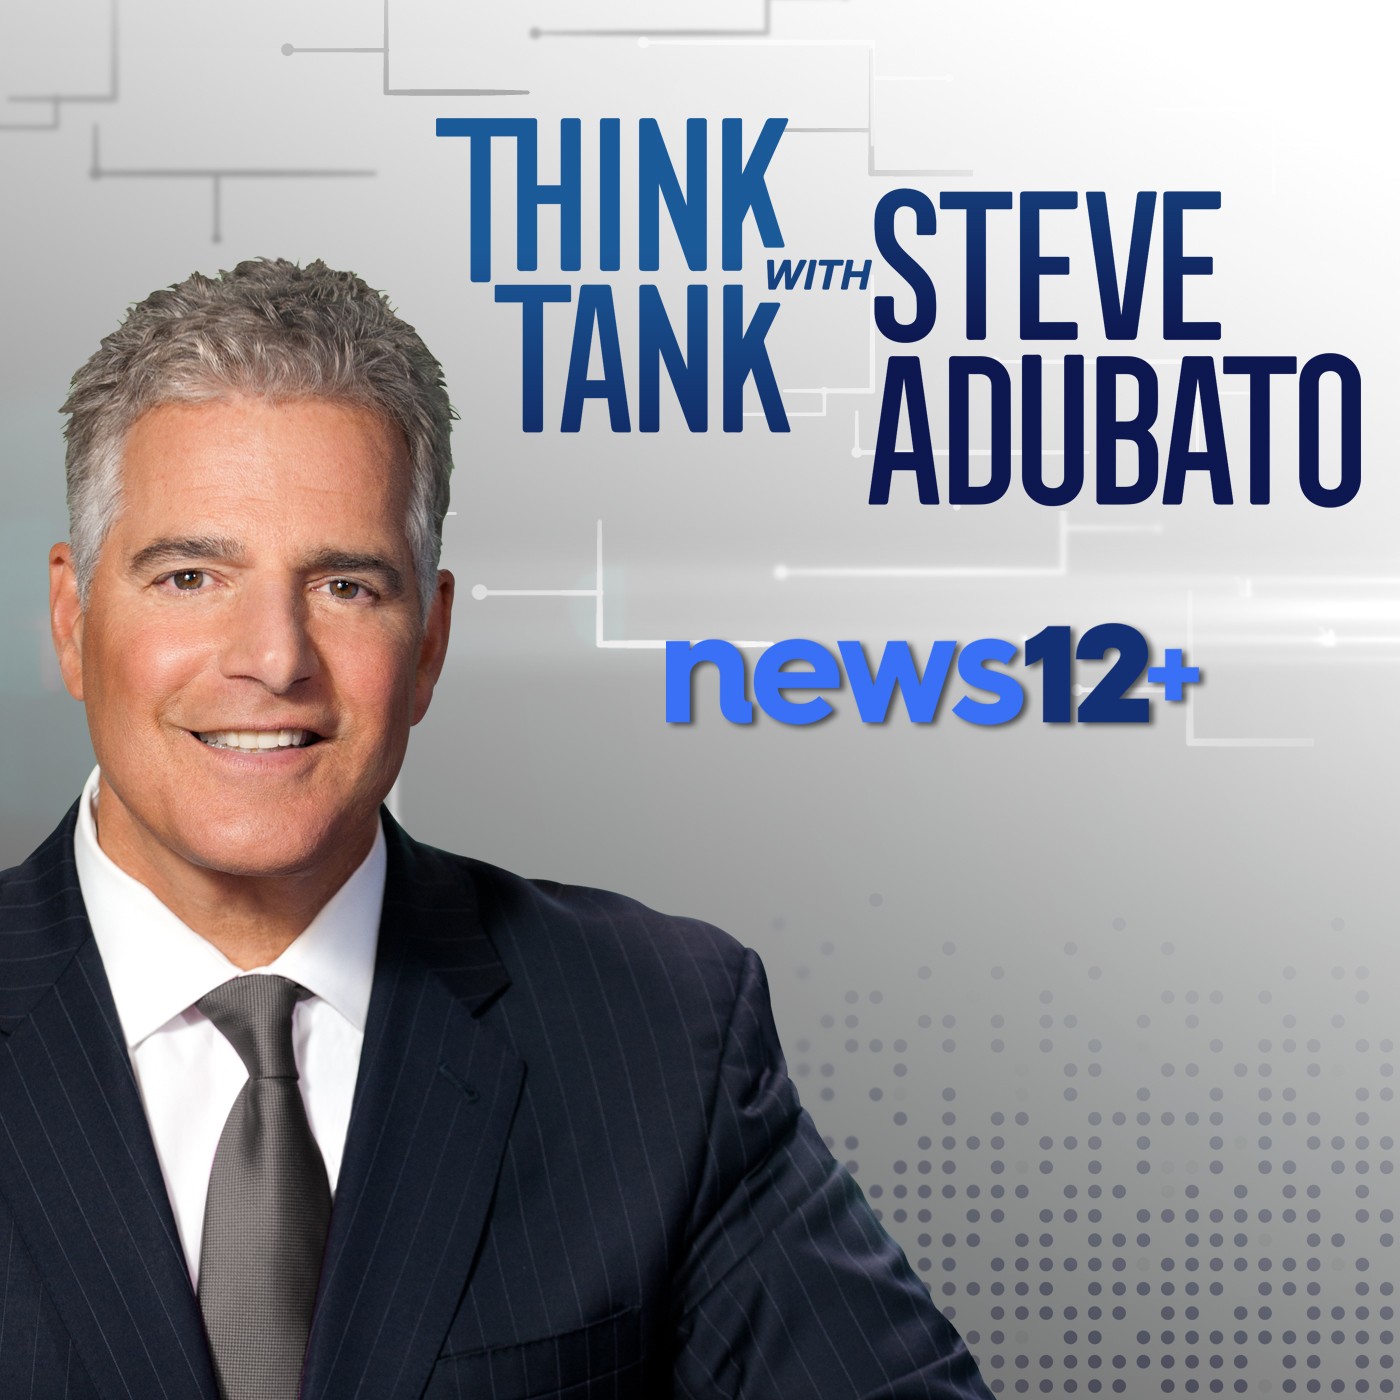 Think Tank on News 12+